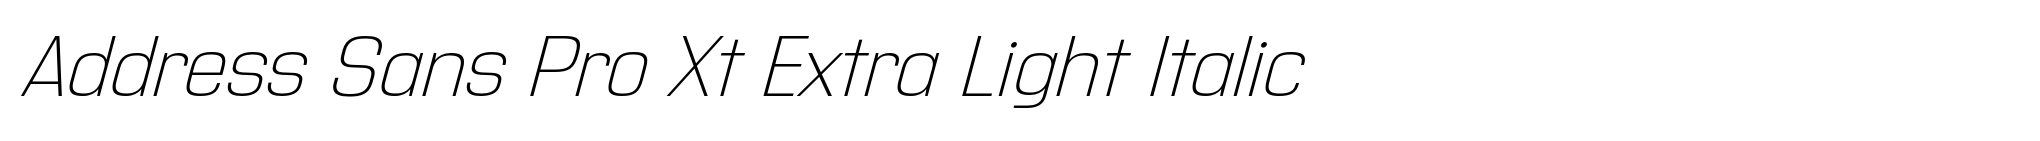 Address Sans Pro Xt Extra Light Italic image